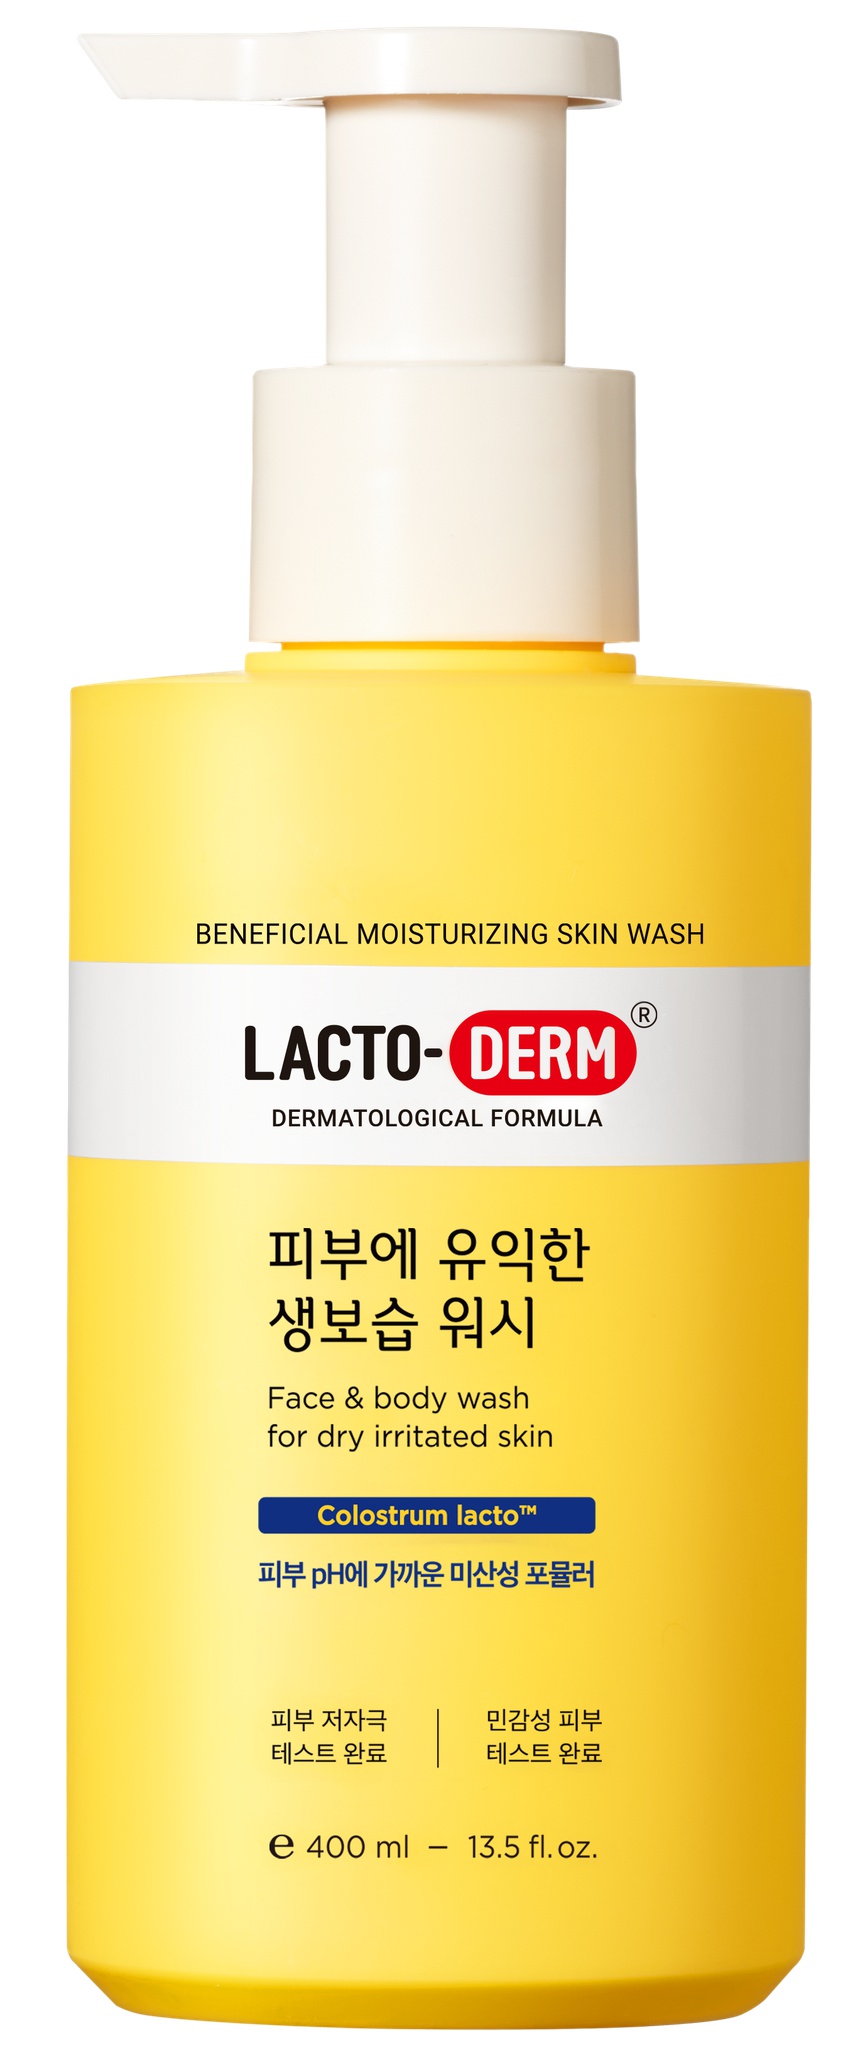 LACTO-DERM Beneficial Moisturizing Skin Wash